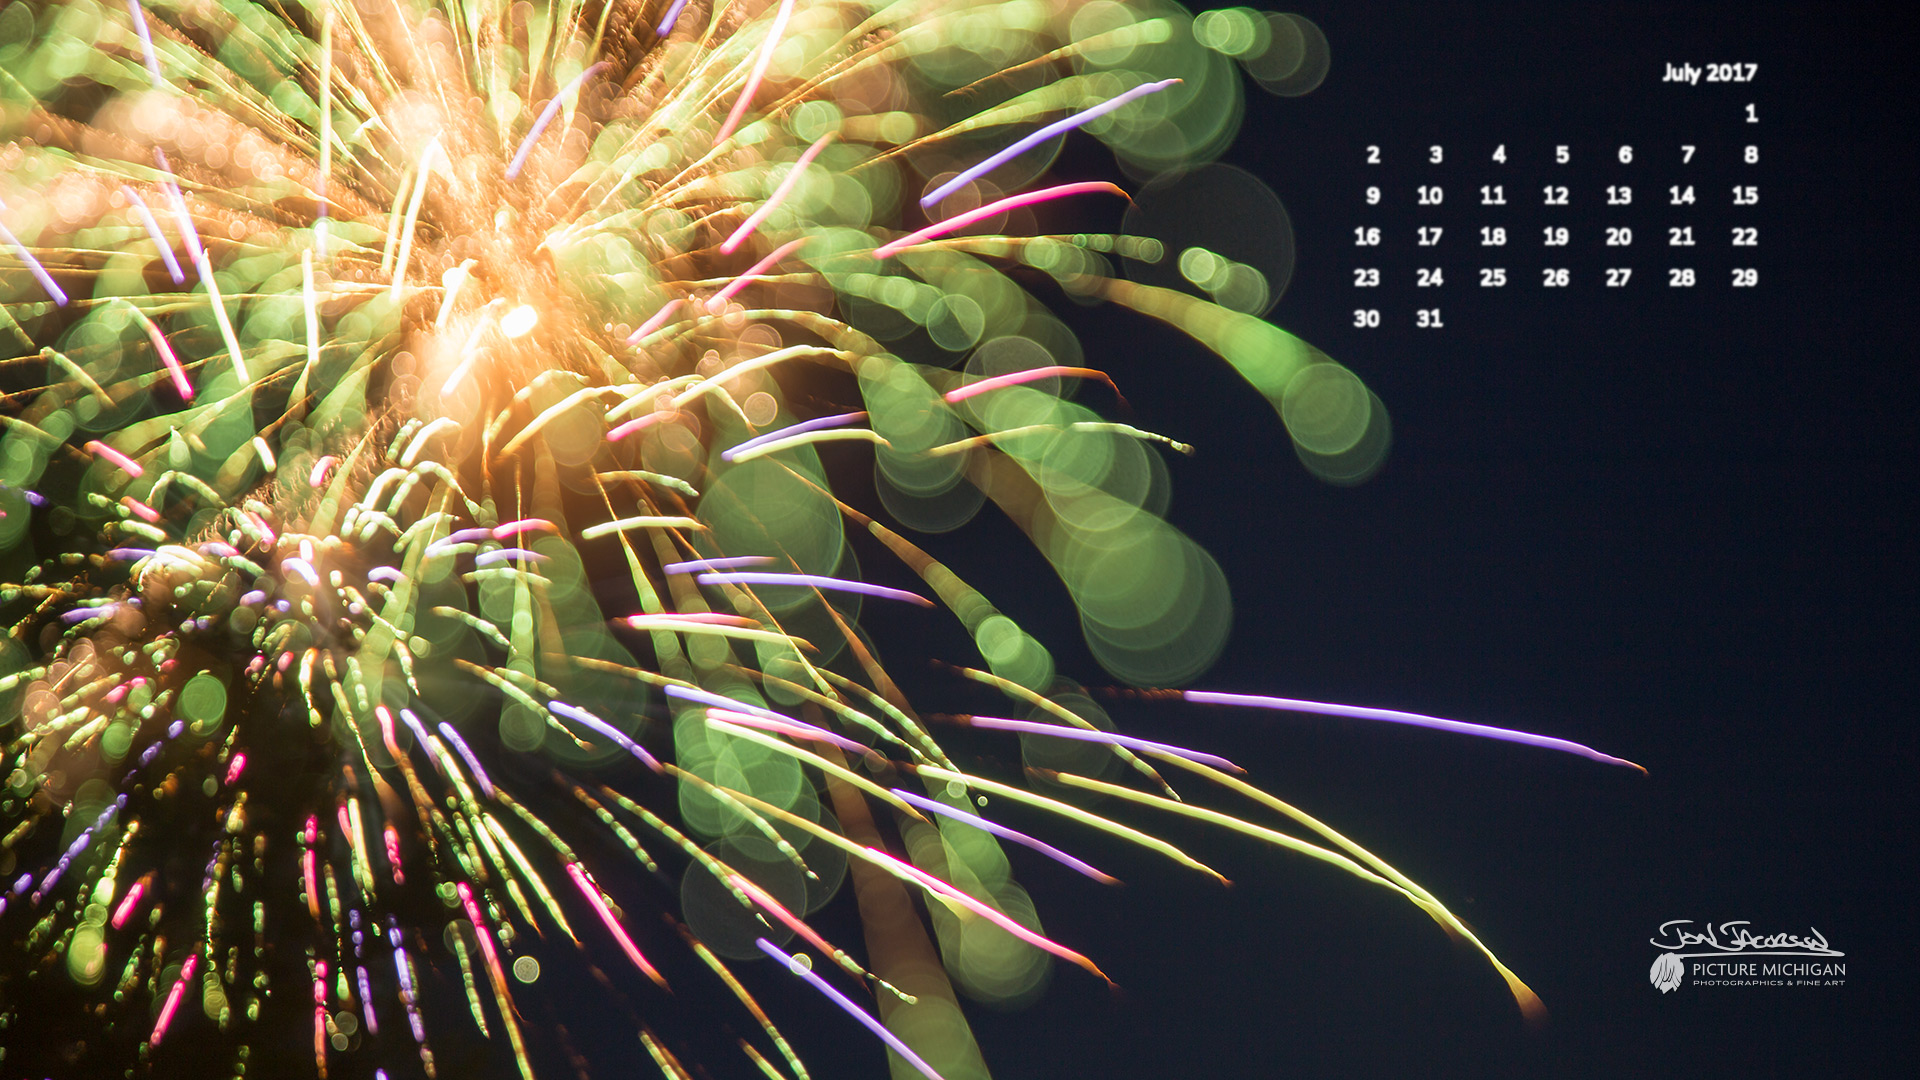 July 2017 Calendar Desktop Wallpaper Fireworks Picture Michigan 1920x1080